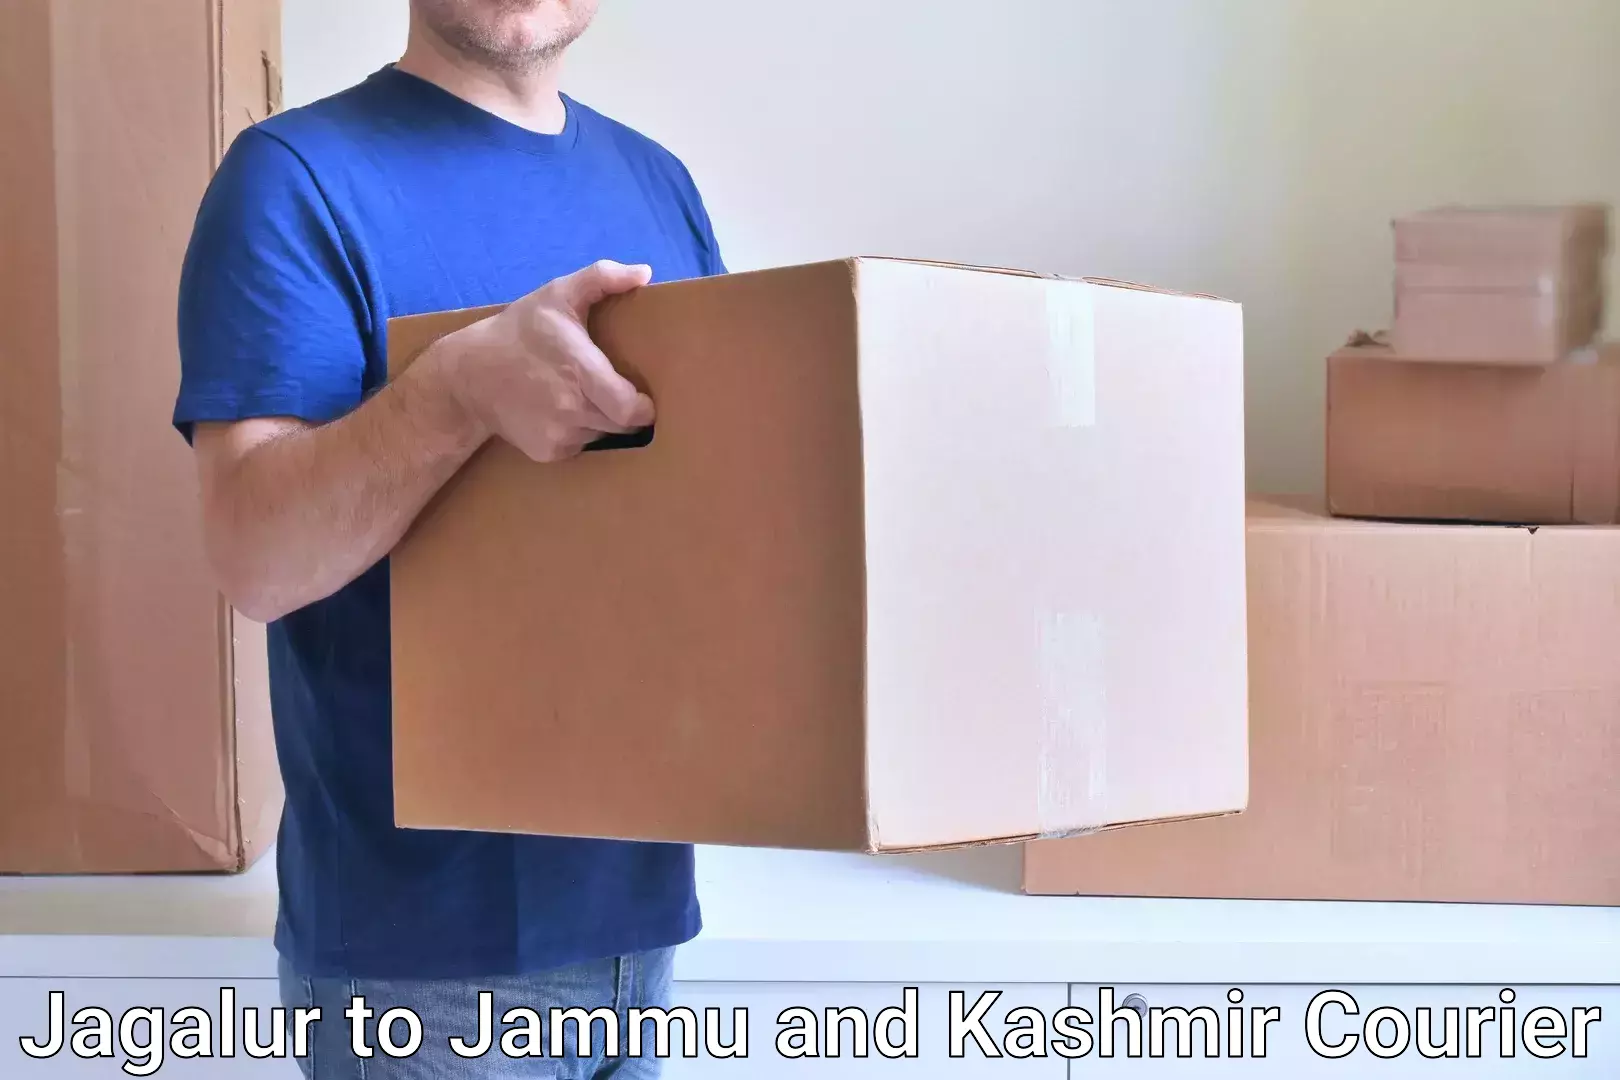 Same-day delivery options Jagalur to Anantnag